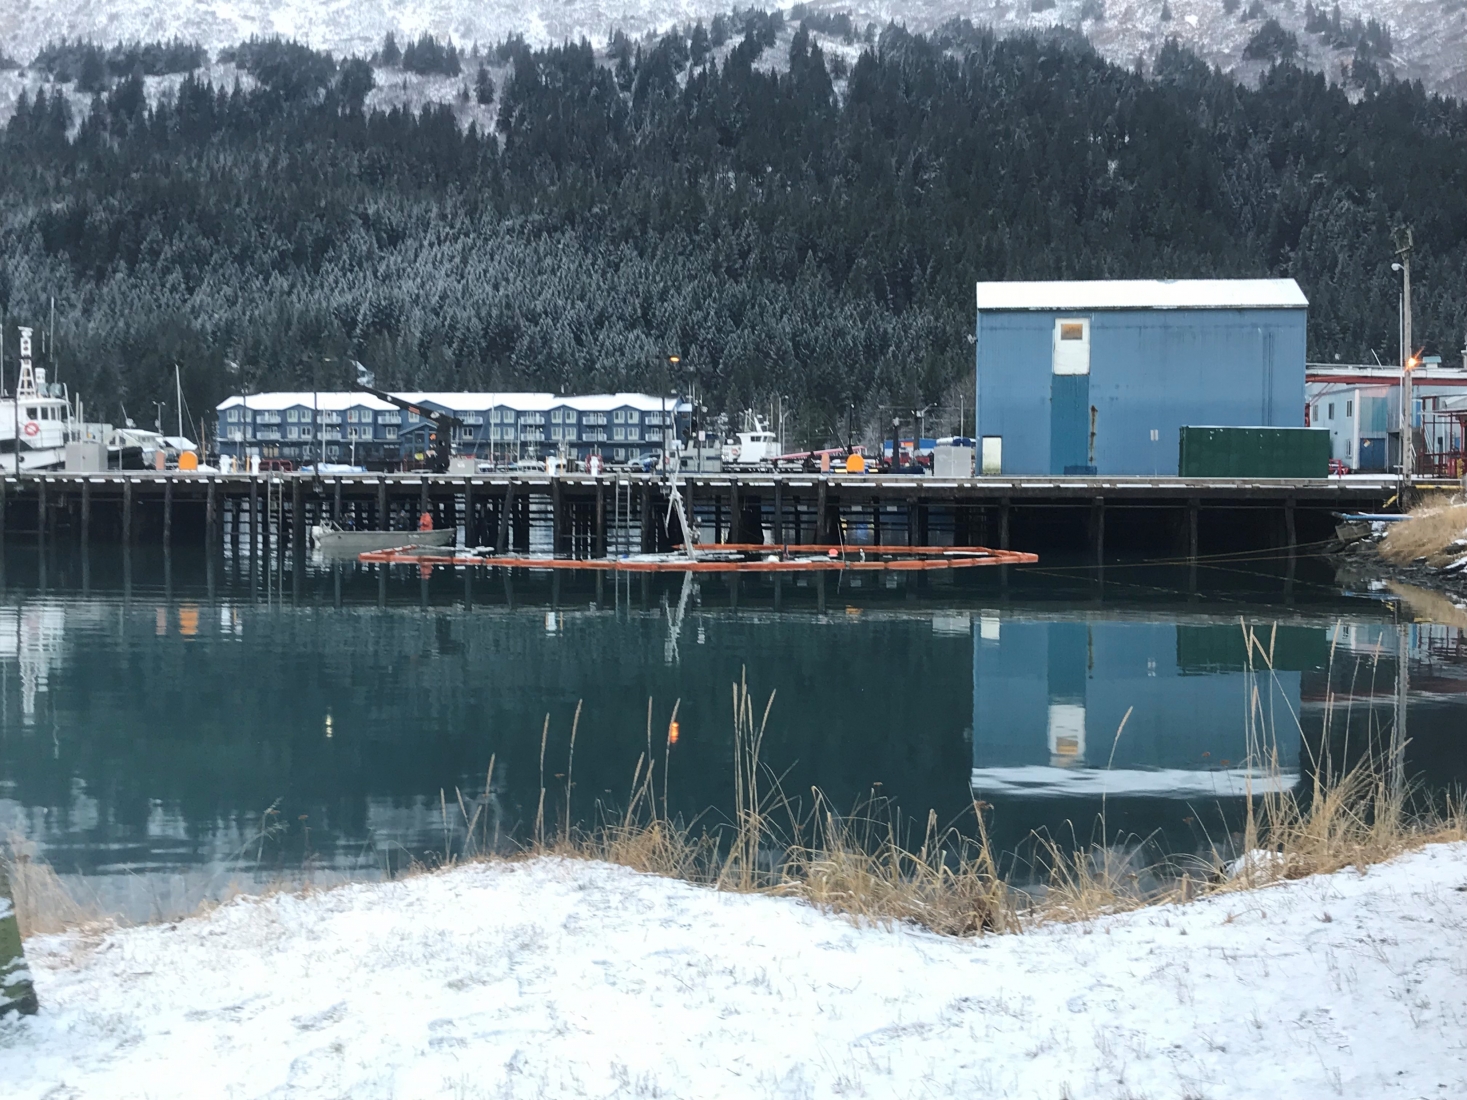 Orange pollution boom around a sunken vessel with snowy mountains in the background.